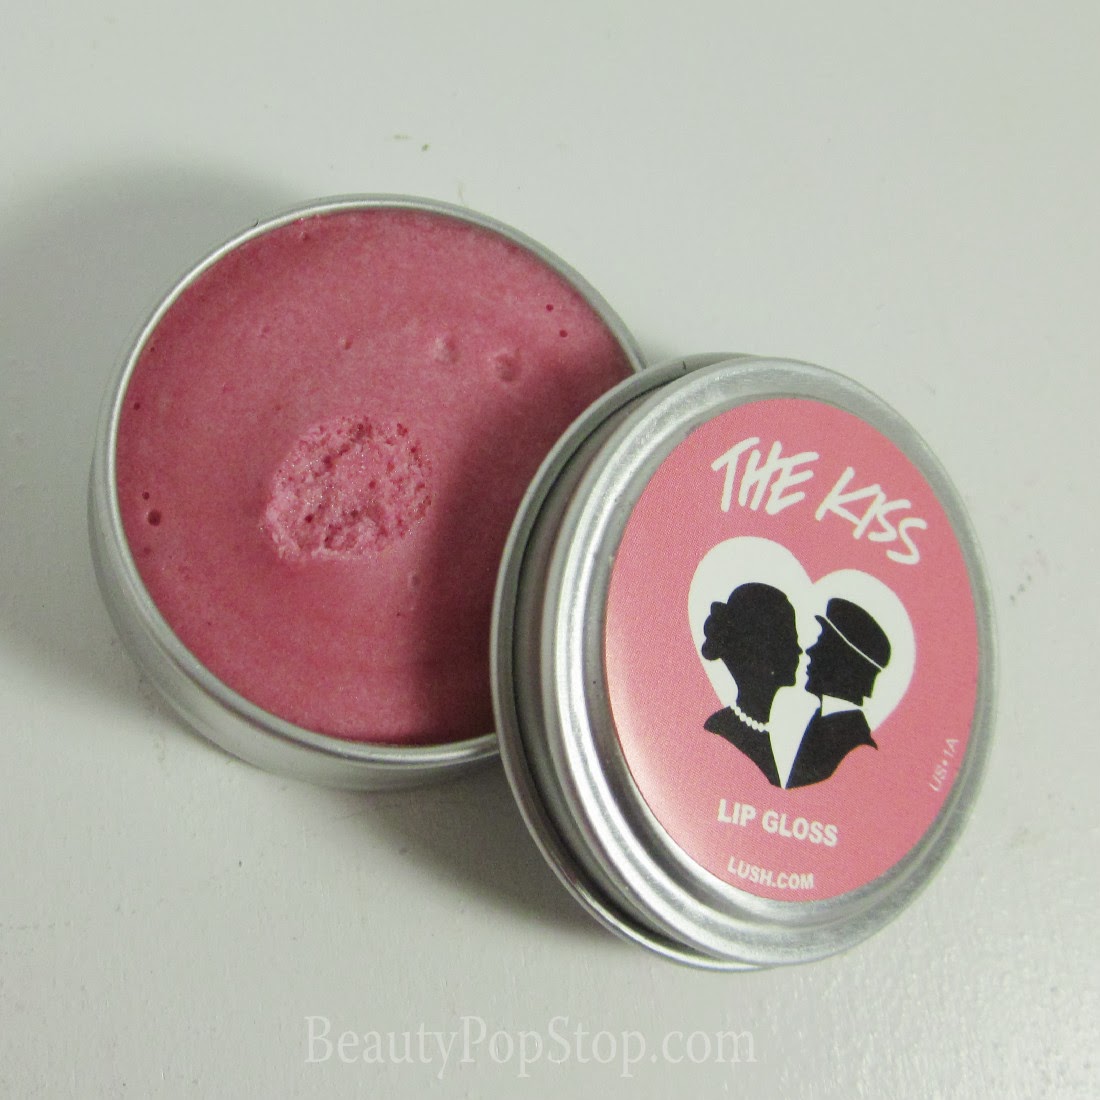 lush the kiss lip balm review